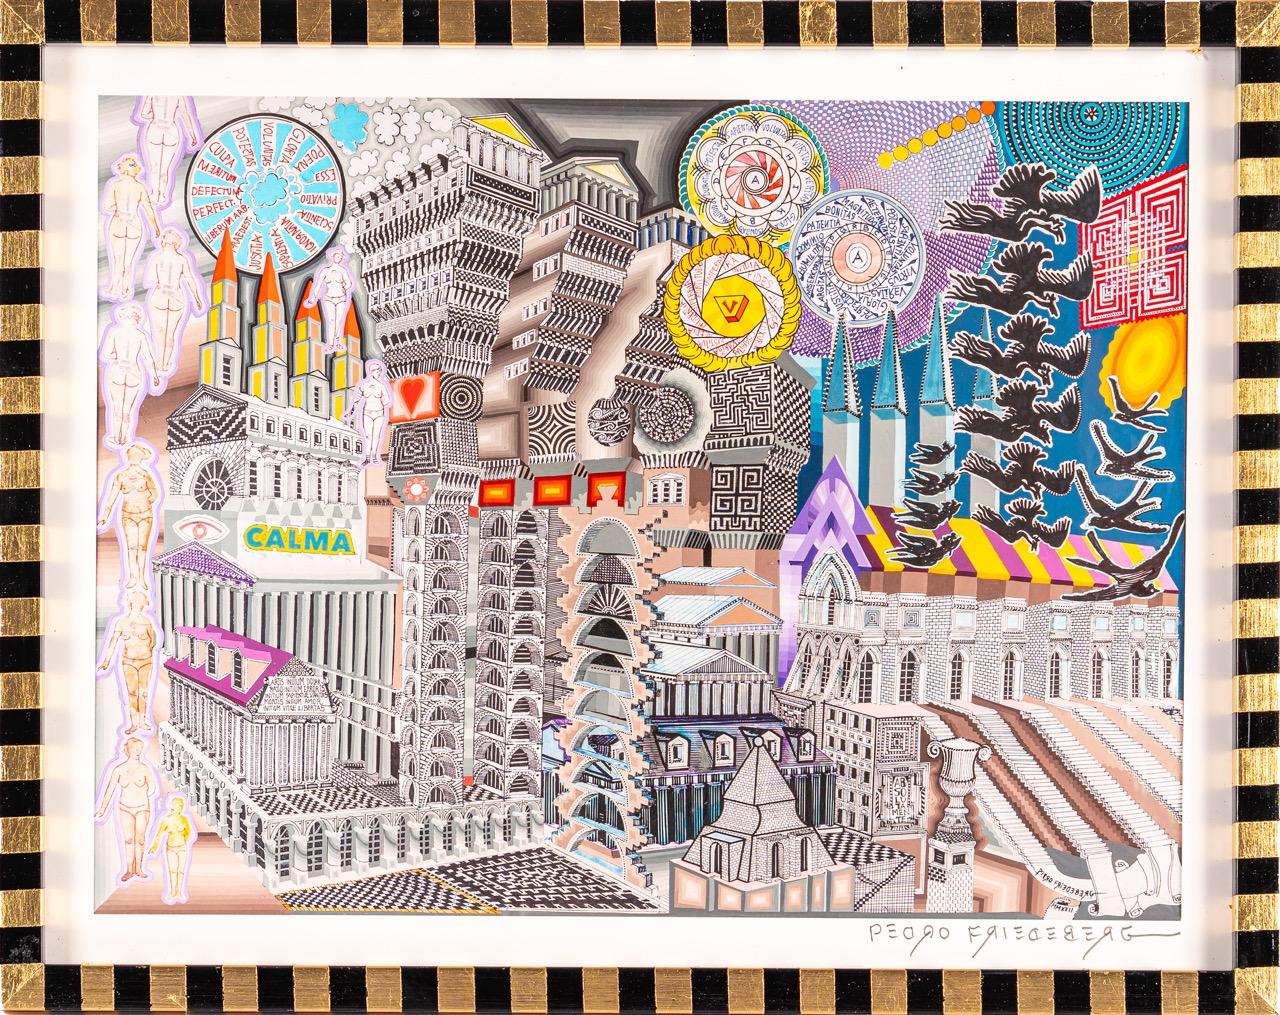 Pedro Friedeberg Still-Life Print - "CALMA" contemporary surrealist print with intricate colorful city landscape